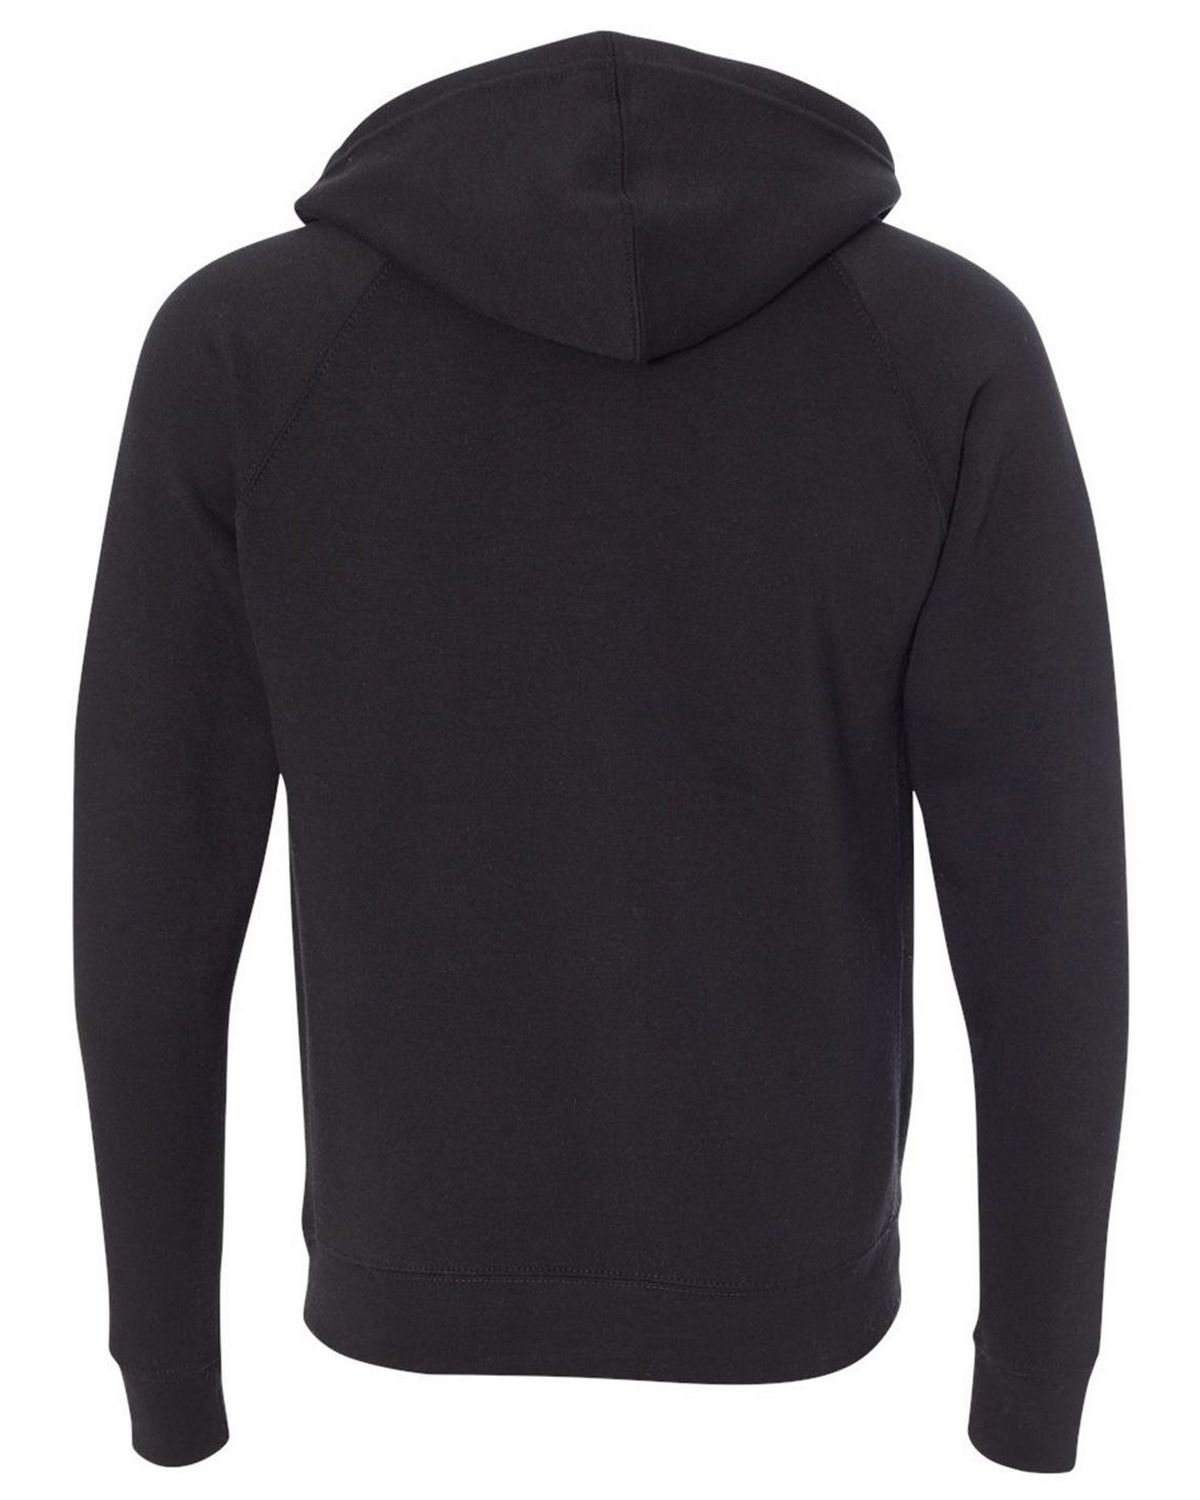 Independent Trading Co. PRM33SBZ Unisex Raglan Hooded Full-Zip Sweatshirt